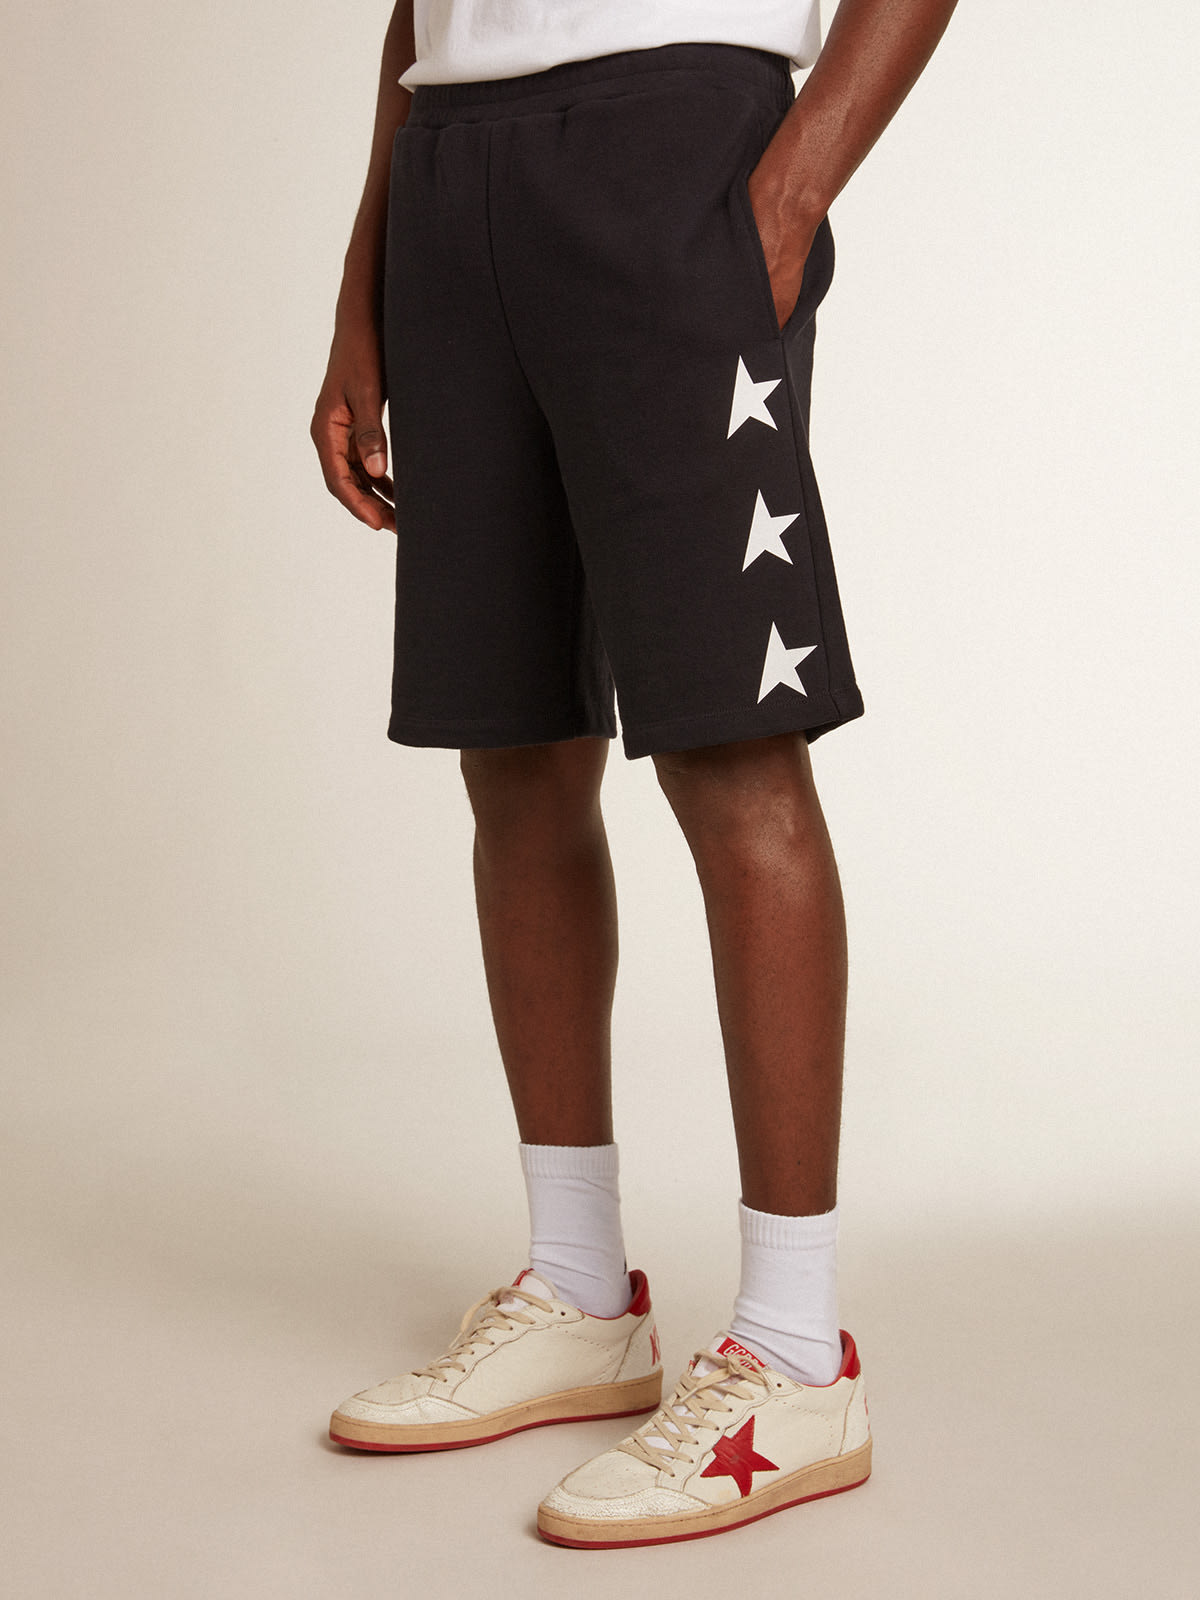 Golden Goose - Men’s black Bermuda shorts with contrasting white stars in 